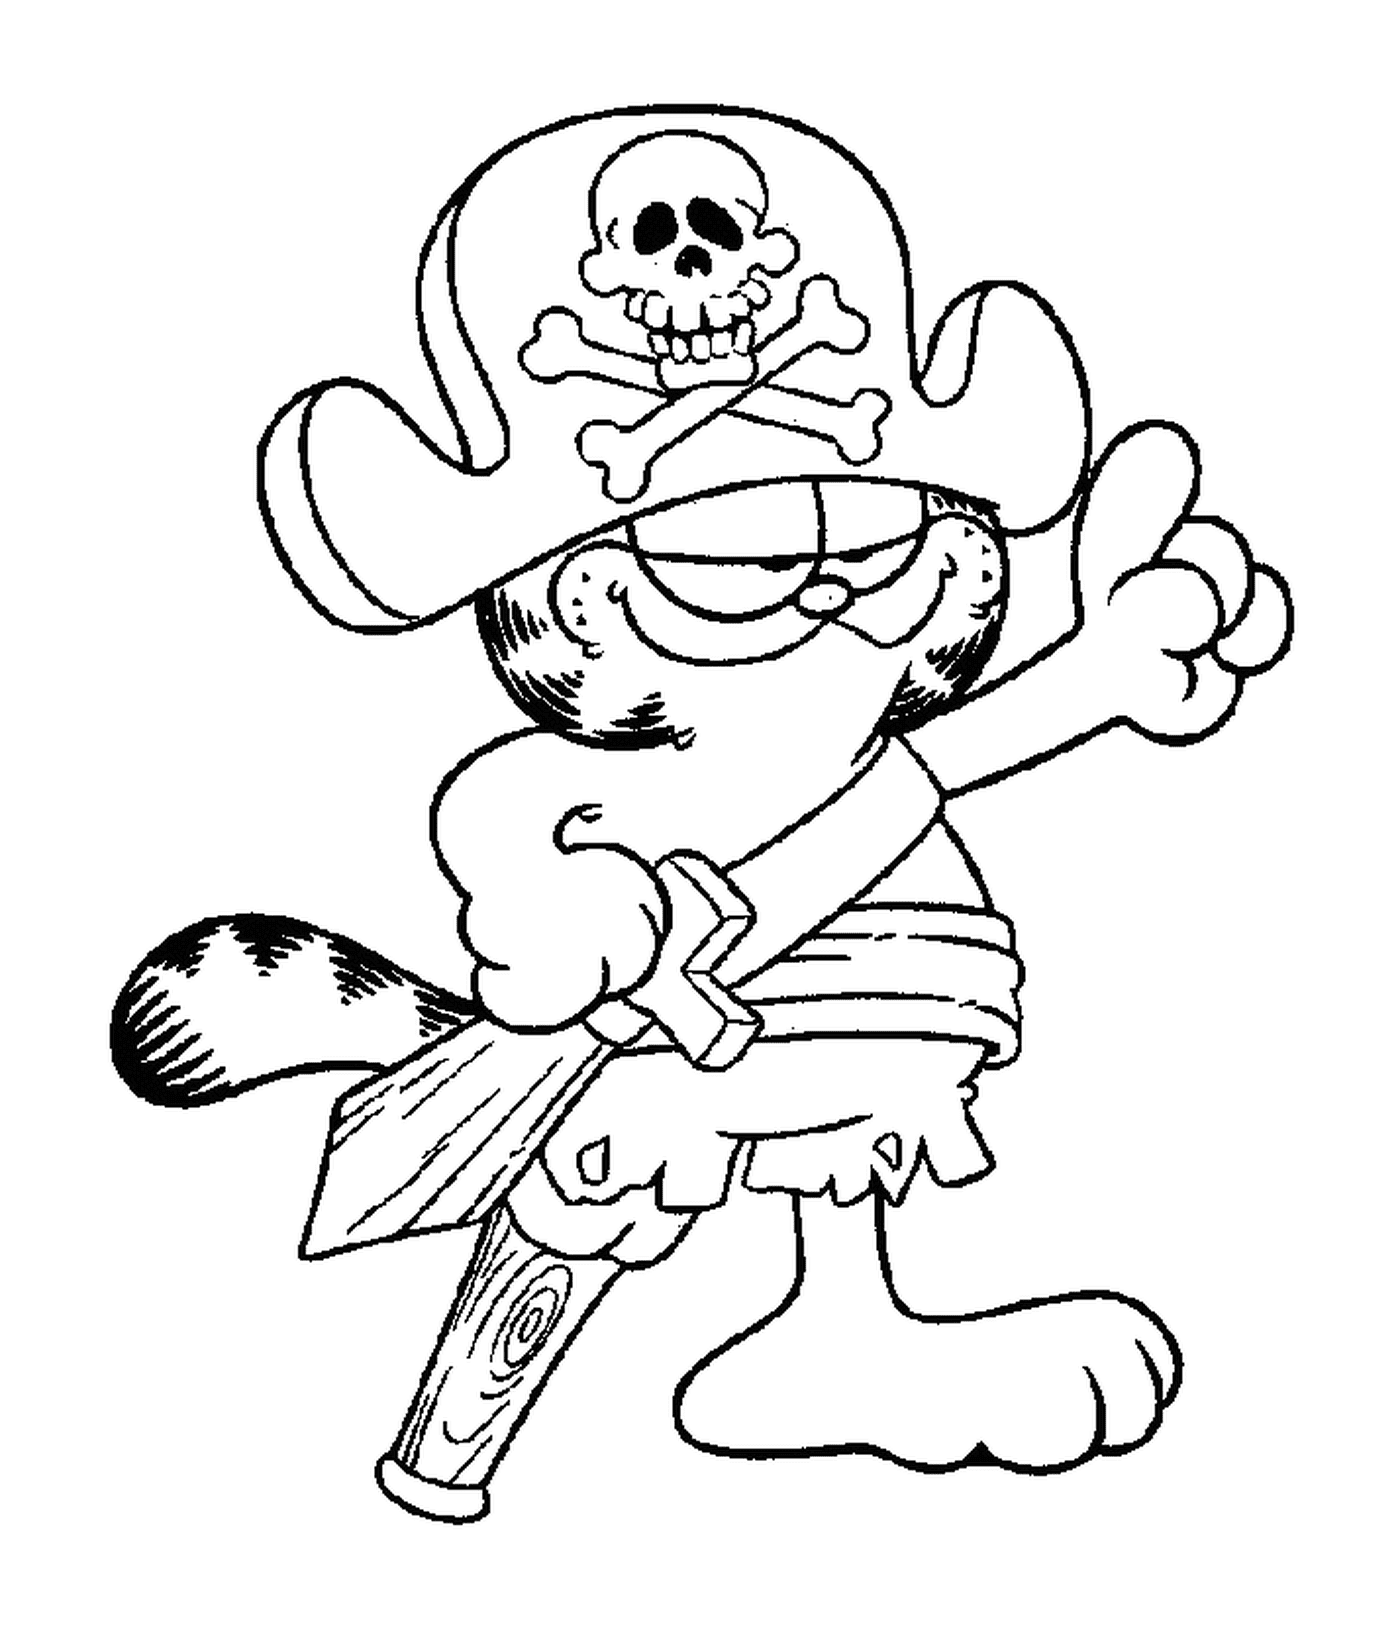   Garfield déguisé en pirate 